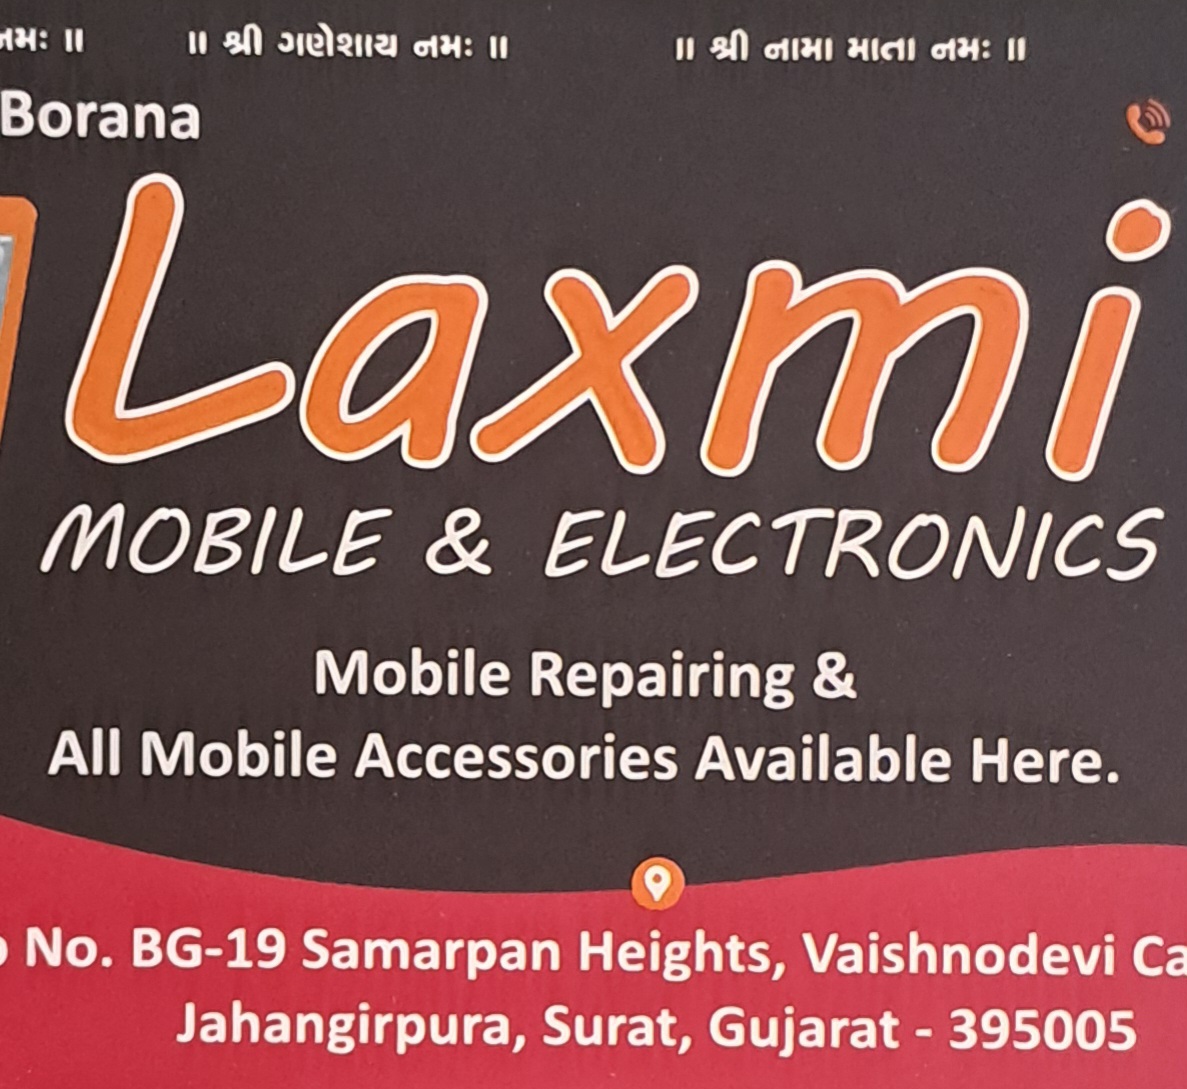 Laxmi mobile & Electronics